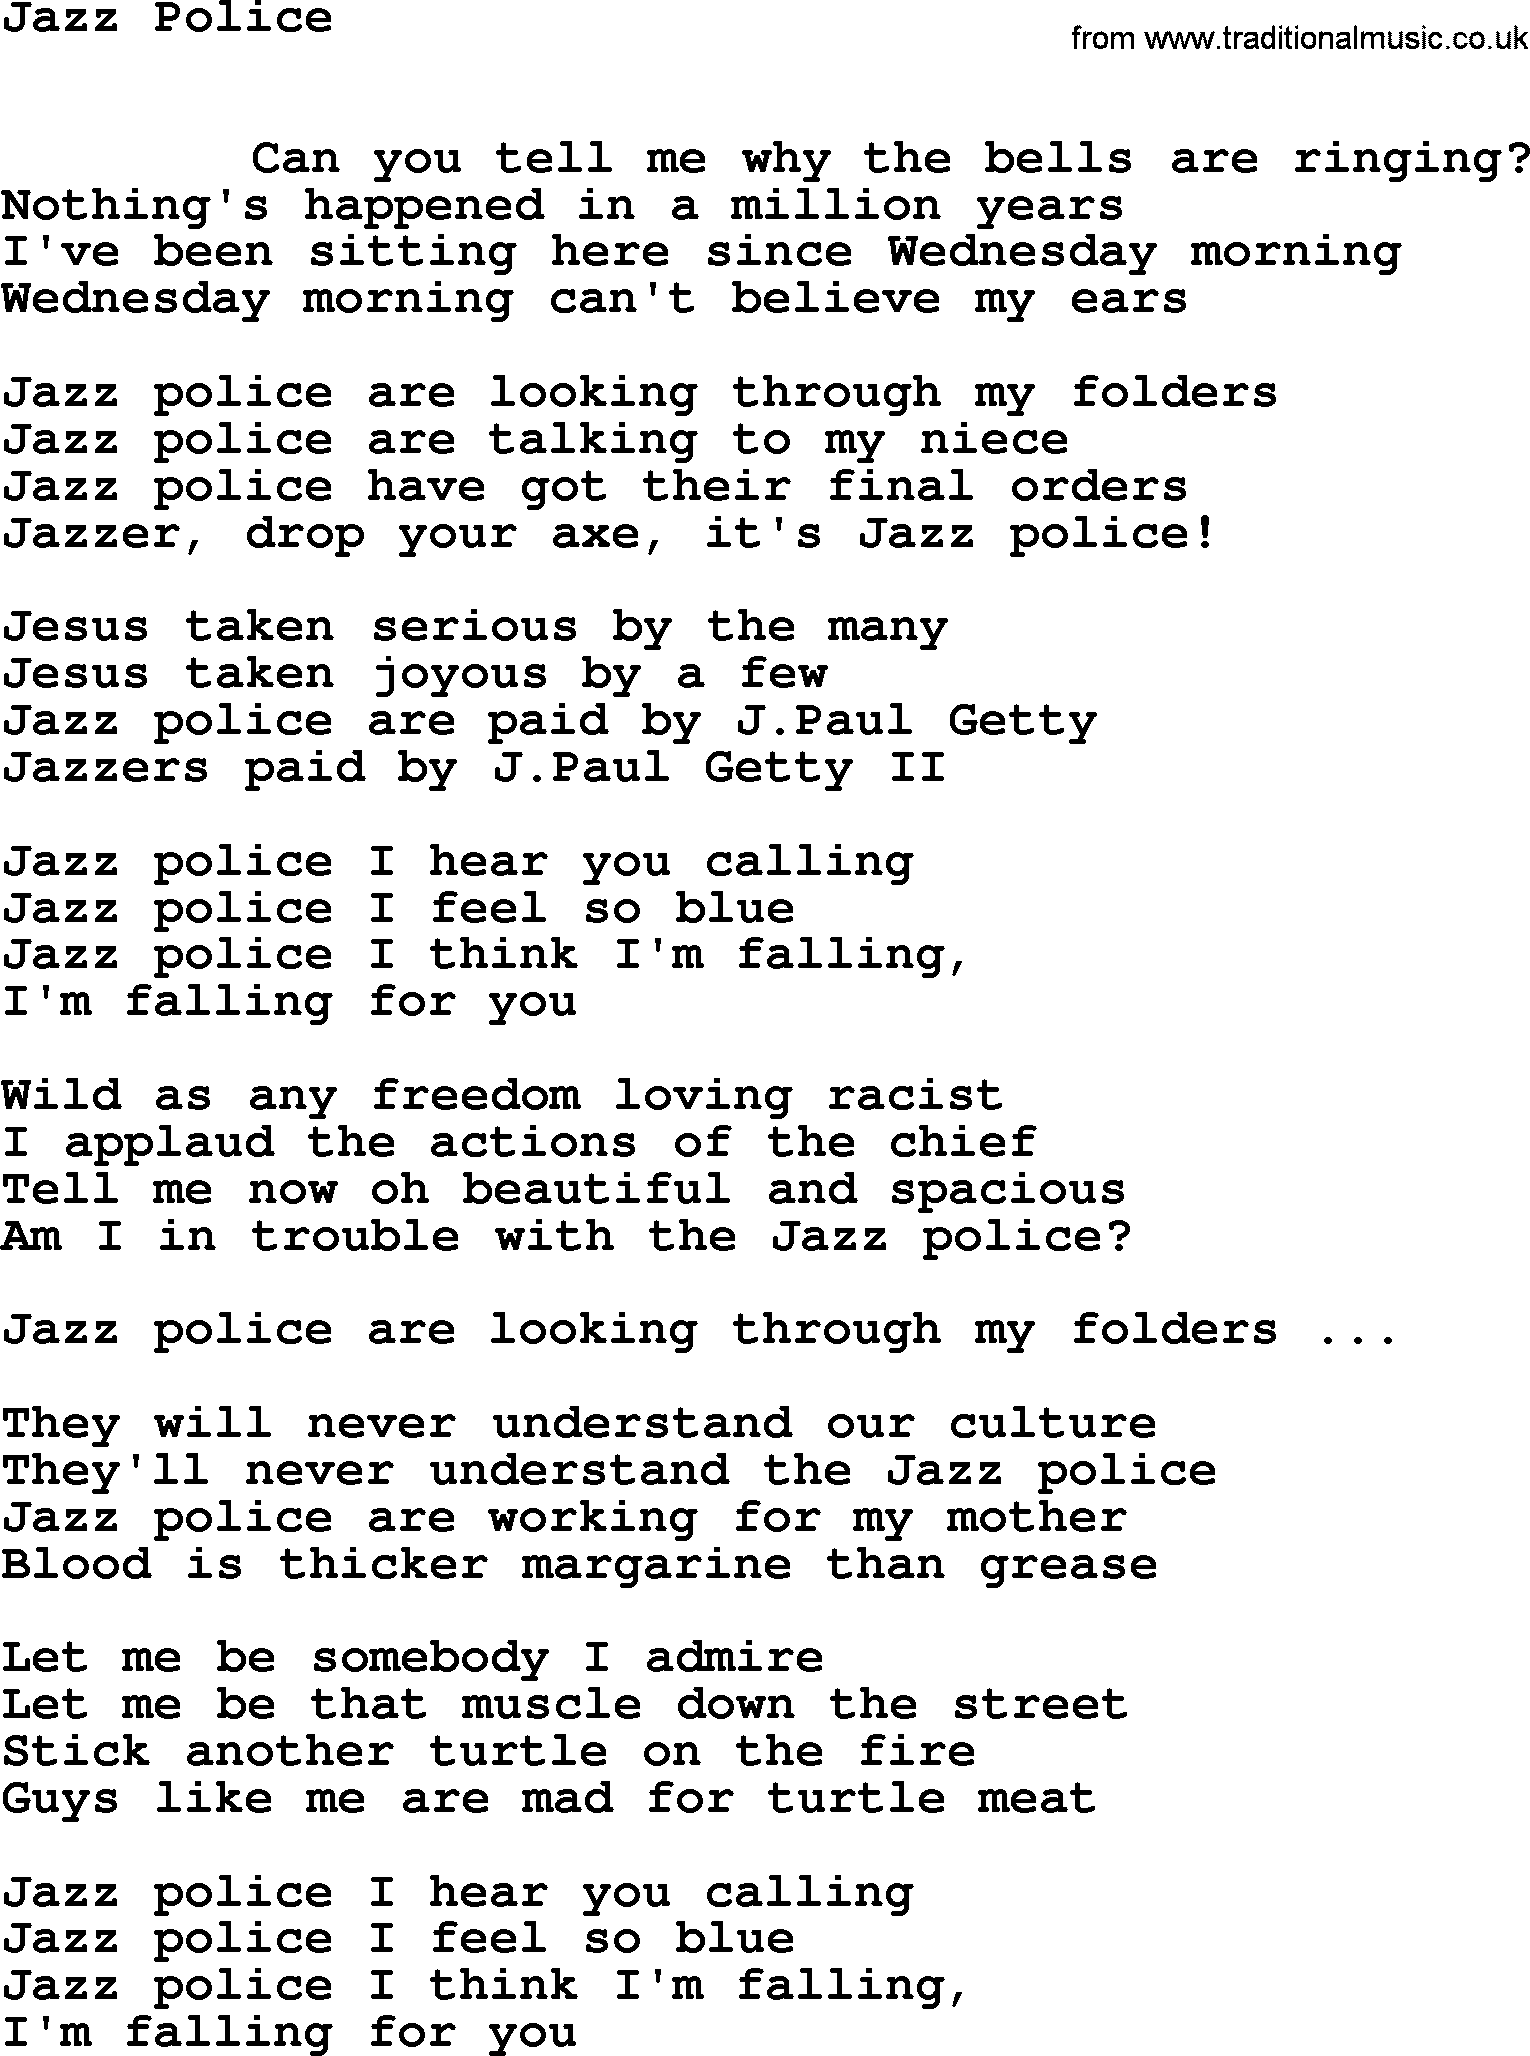 Leonard Cohen song Jazz Police-leonard-cohen.txt lyrics